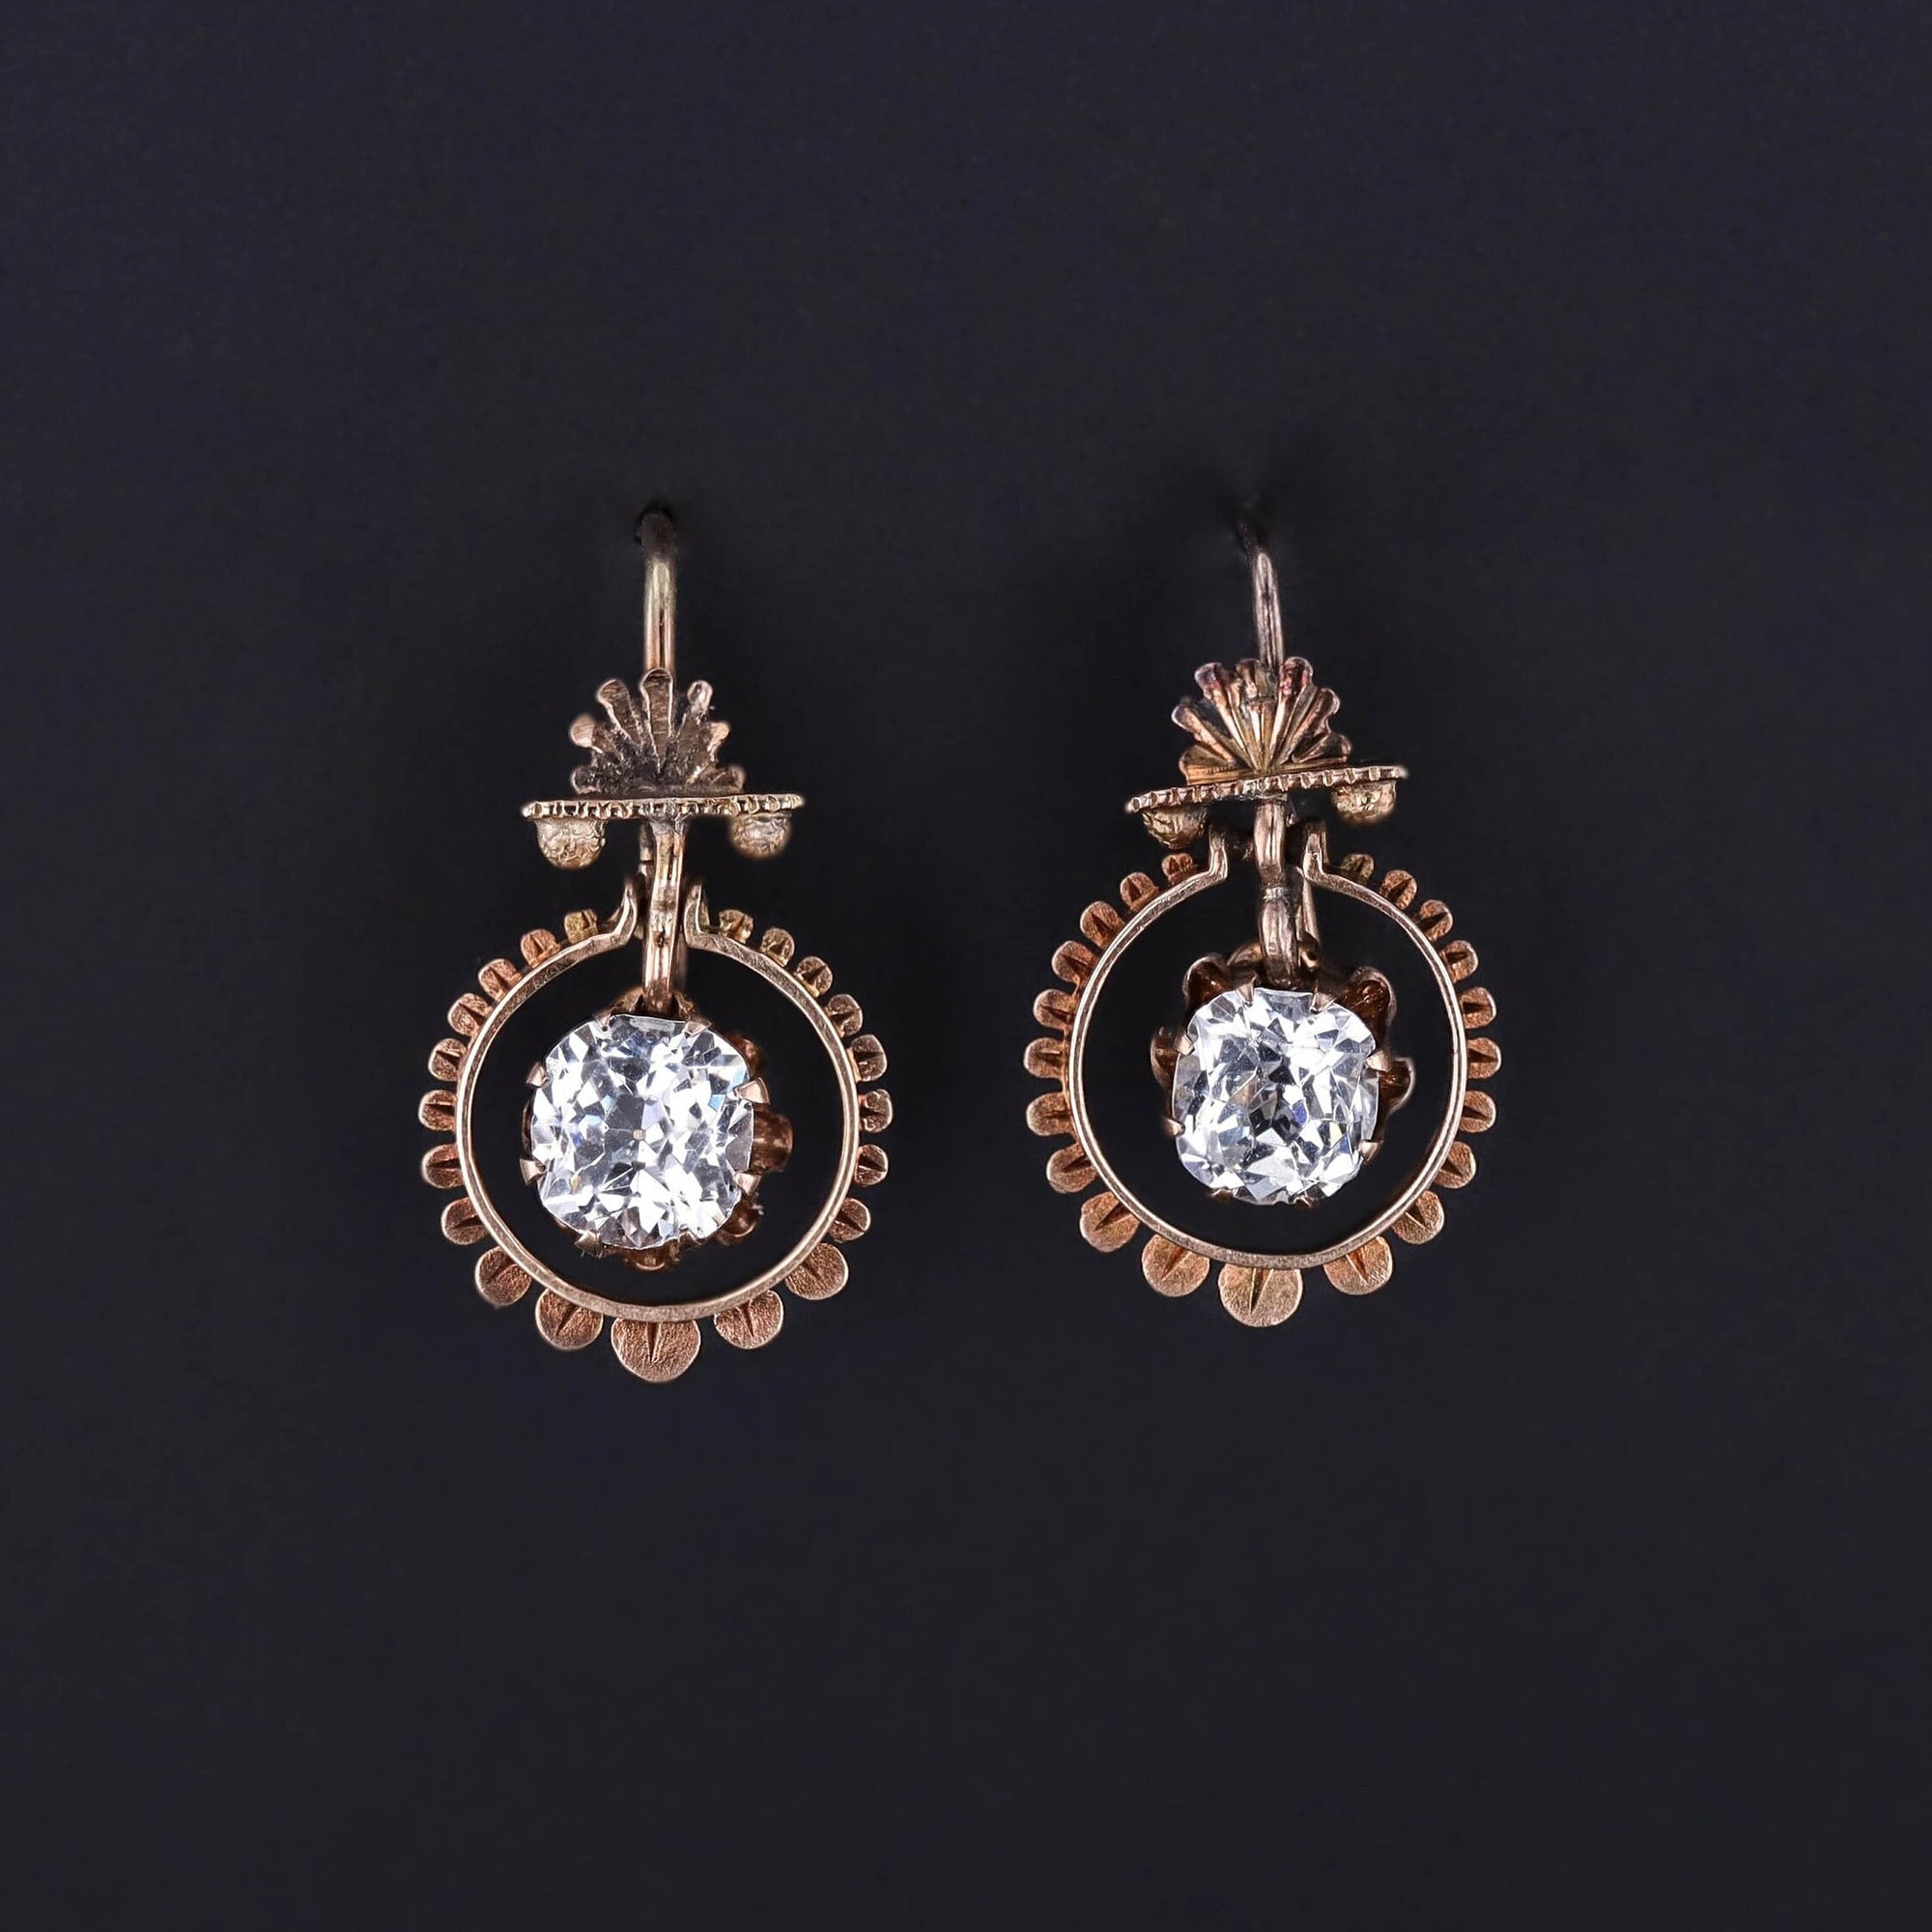 Antique Paste Earrings of 12k Gold